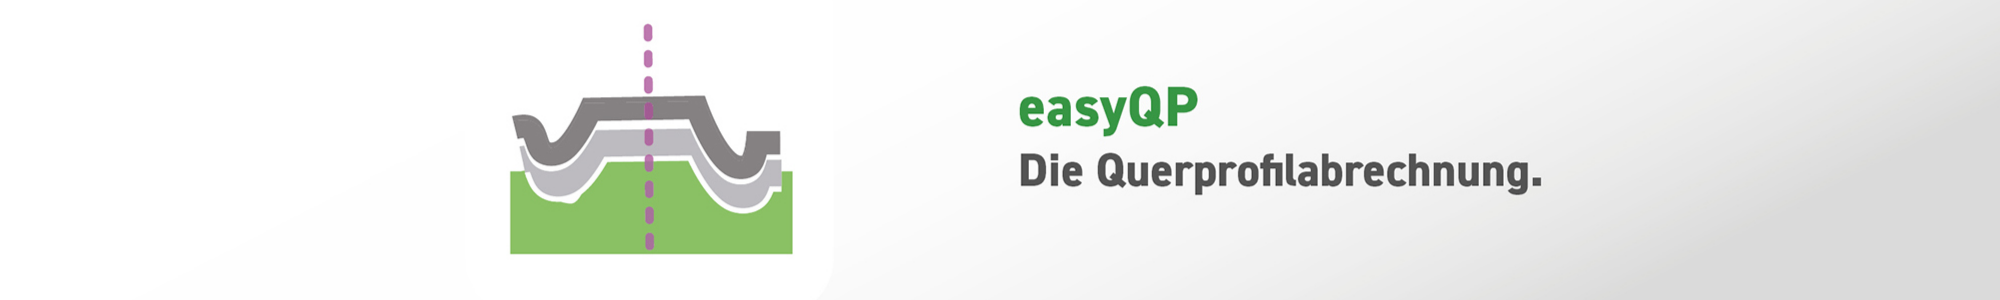 easyQP - isl-kocher GmbH